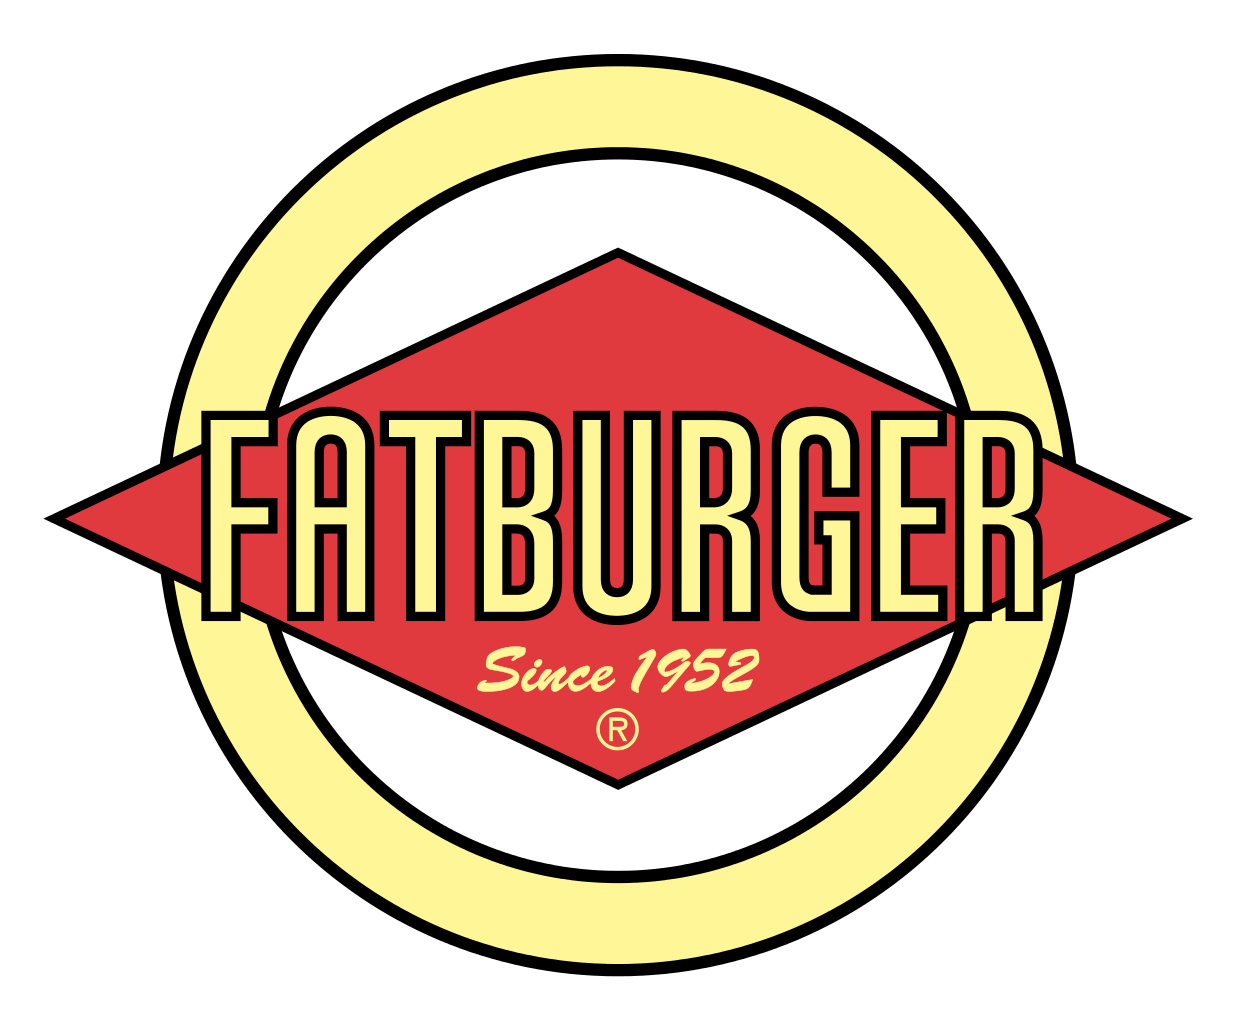 Restaurant with Red Diamond Logo - File:Fatburger logo.svg